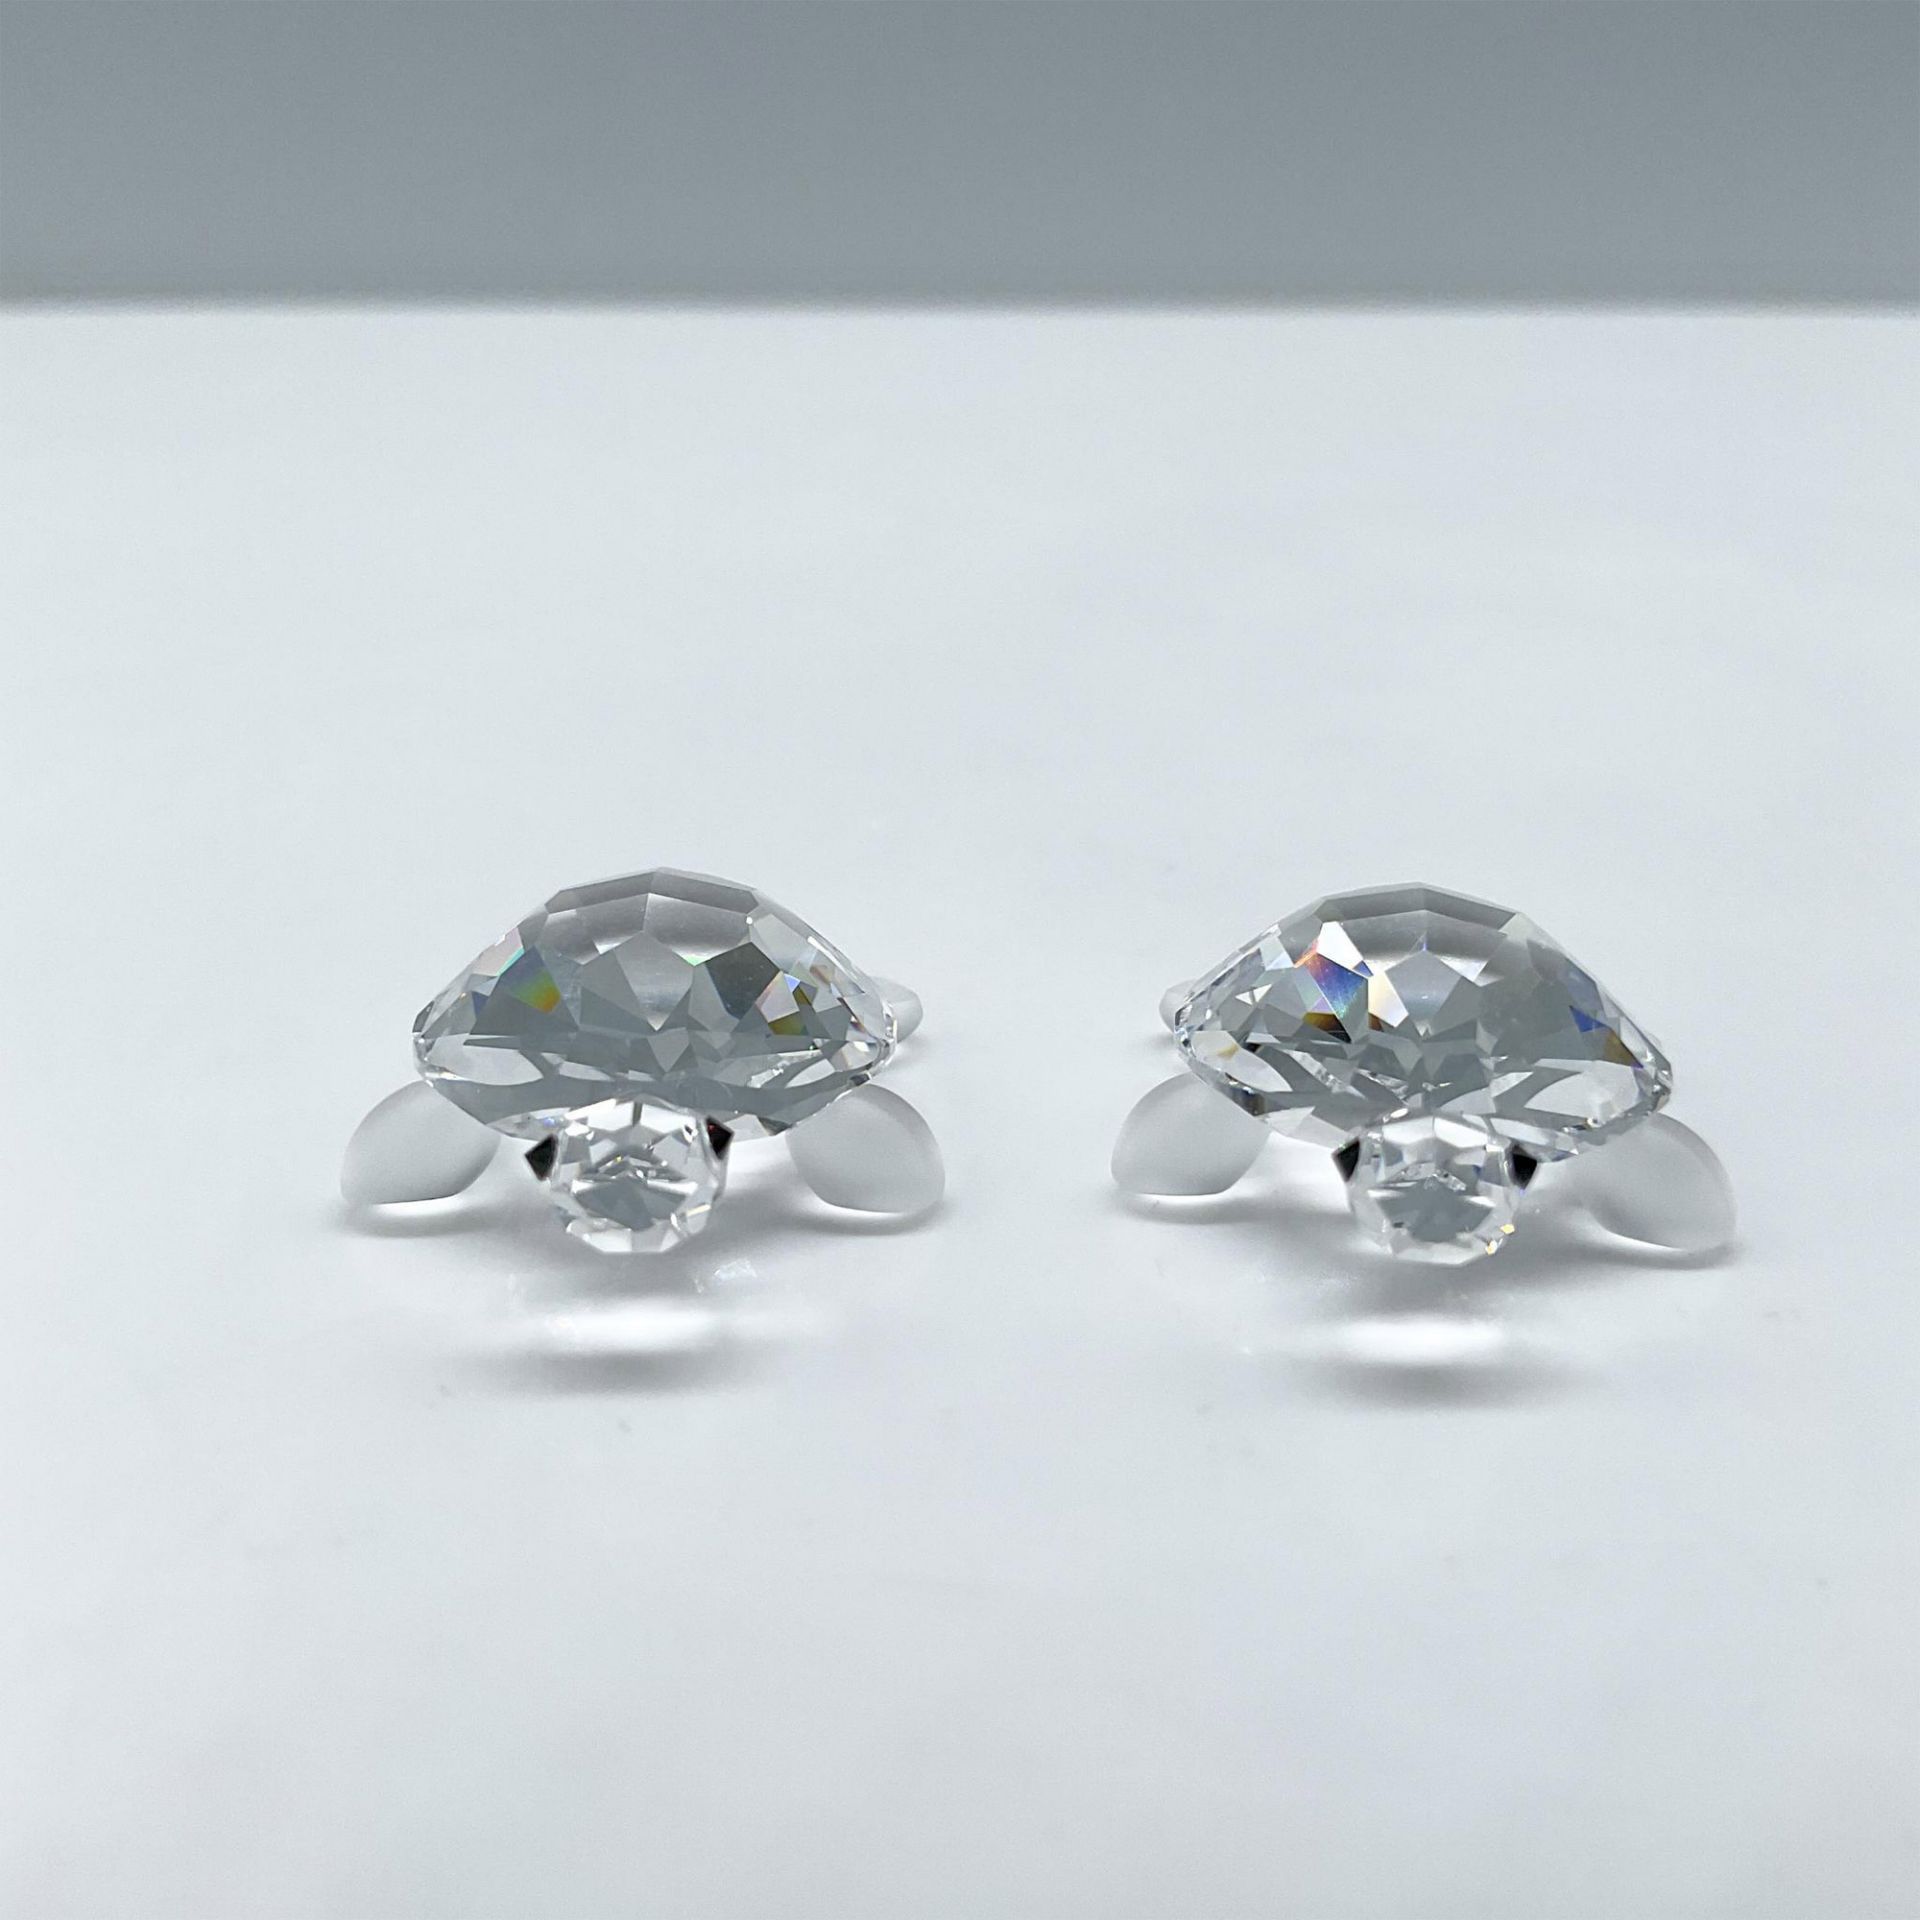 2pc Swarovski Crystal Miniatures, Baby Tortoises